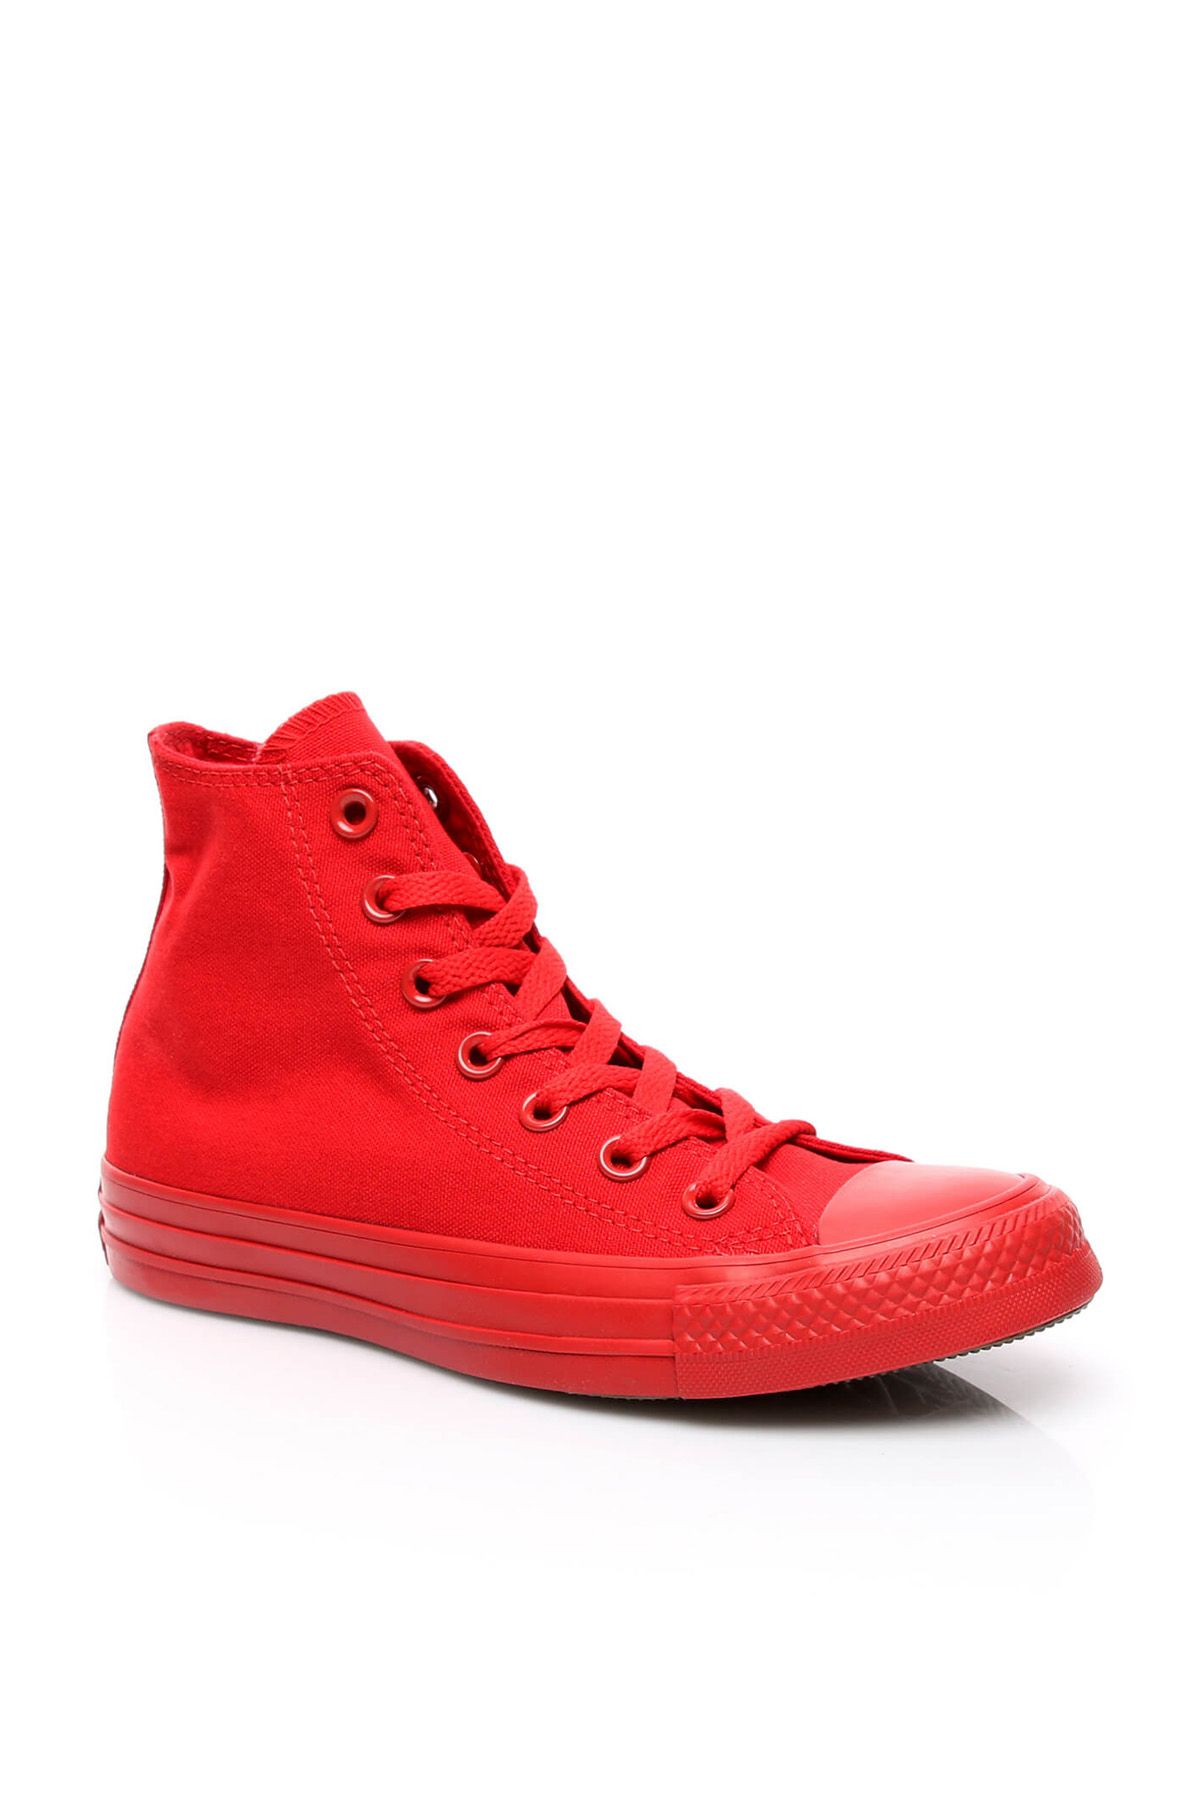 Converse Kadın Sneaker 152702C